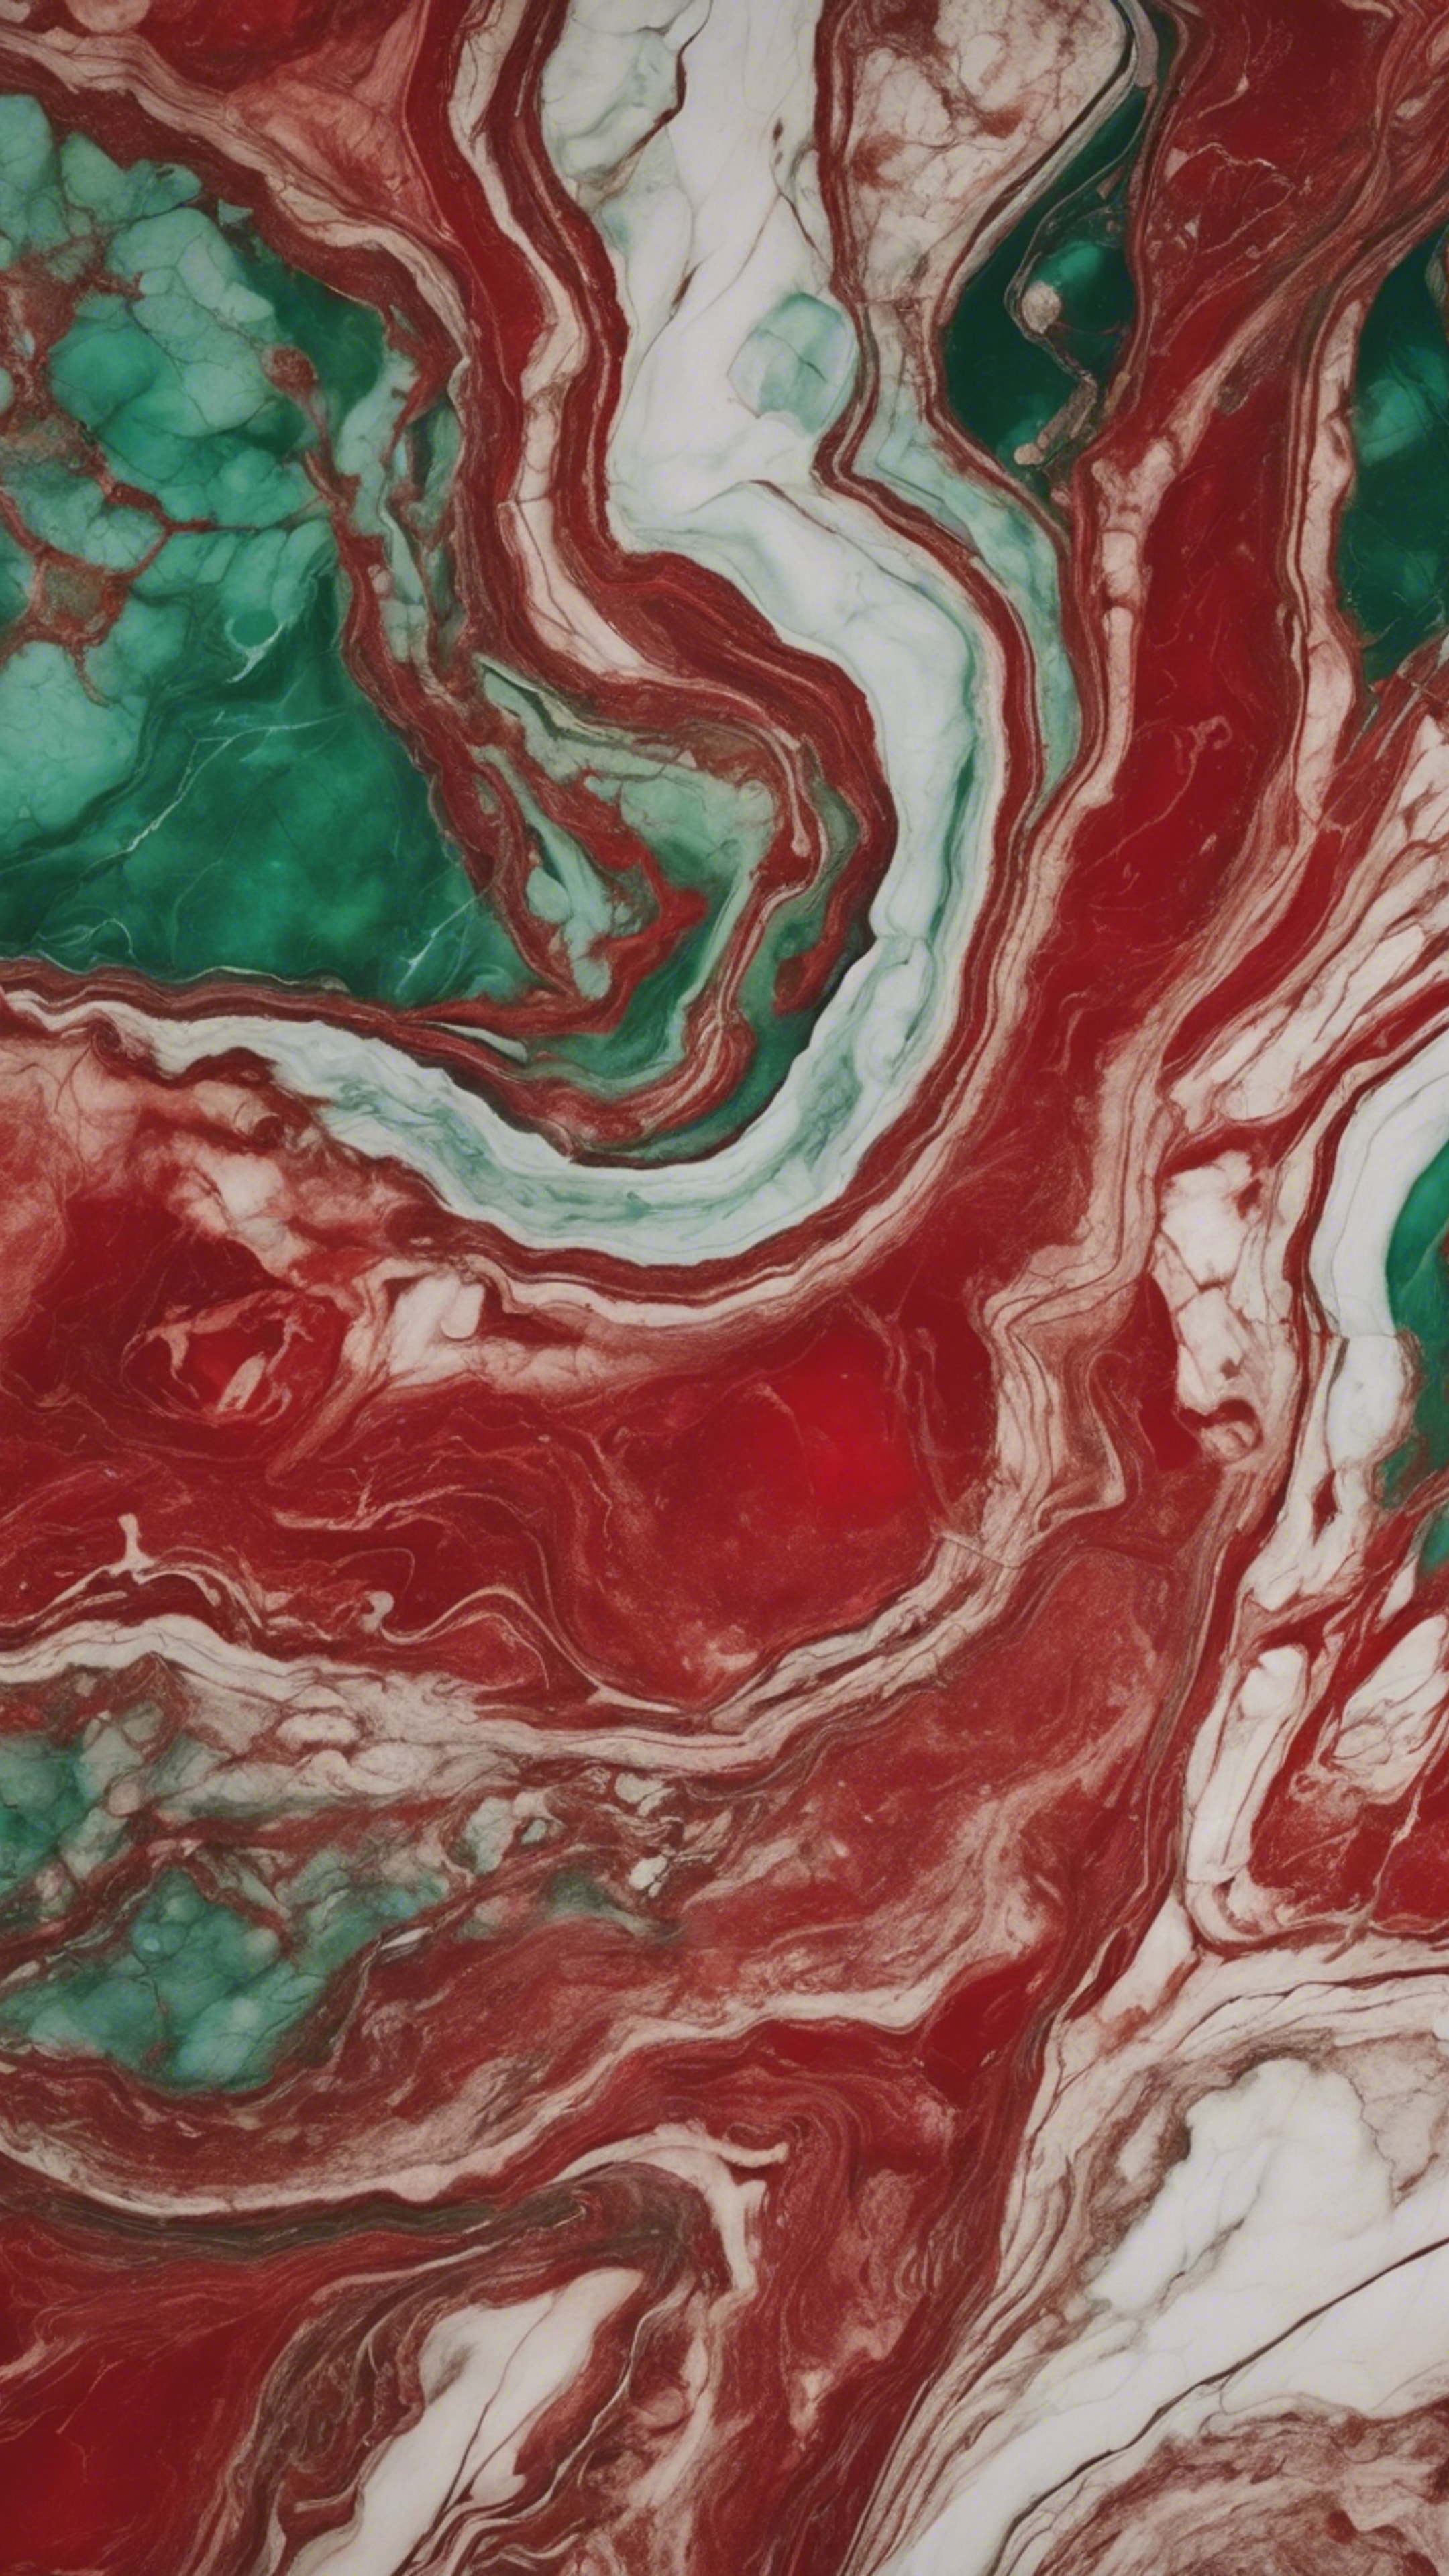 Elegant red and green marble pattern with veins running across. ورق الجدران[edb4d3fbd47c4b239d5a]